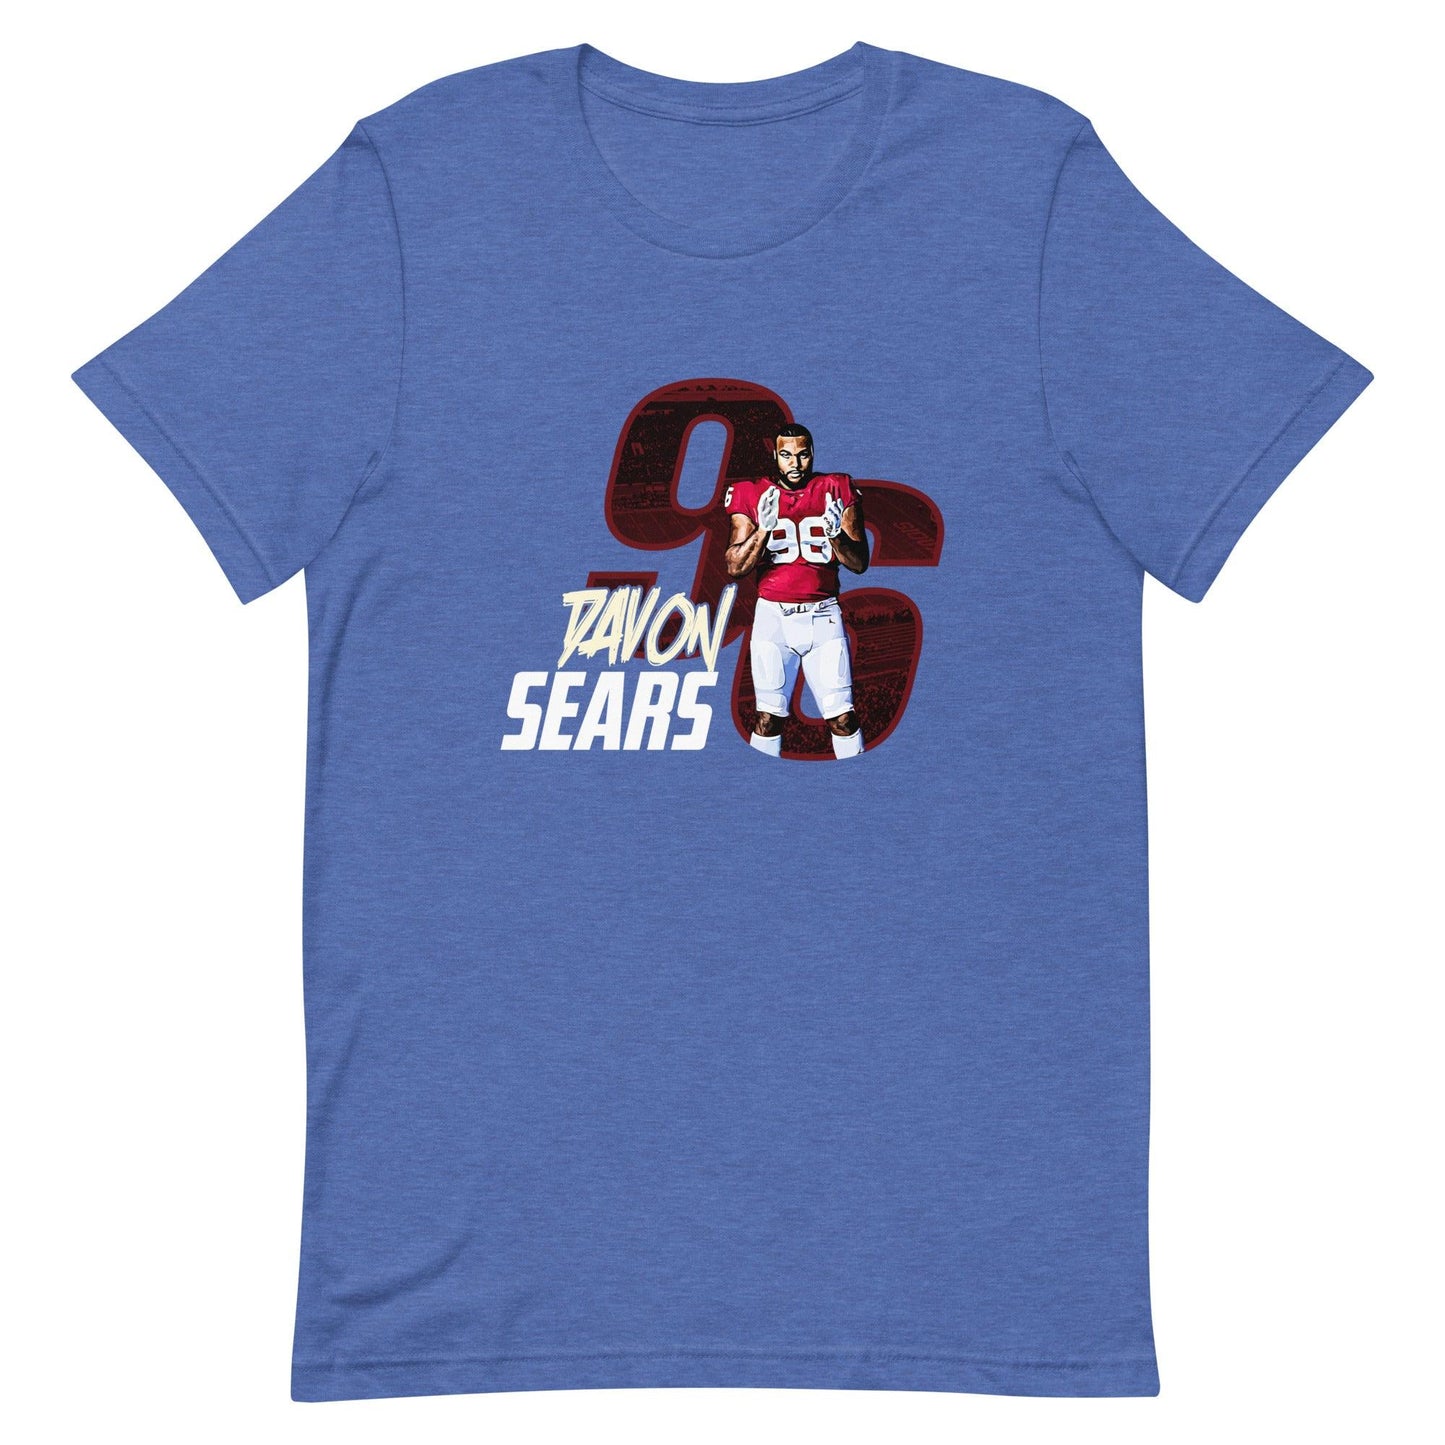 Davon Sears "Gameday" t-shirt - Fan Arch